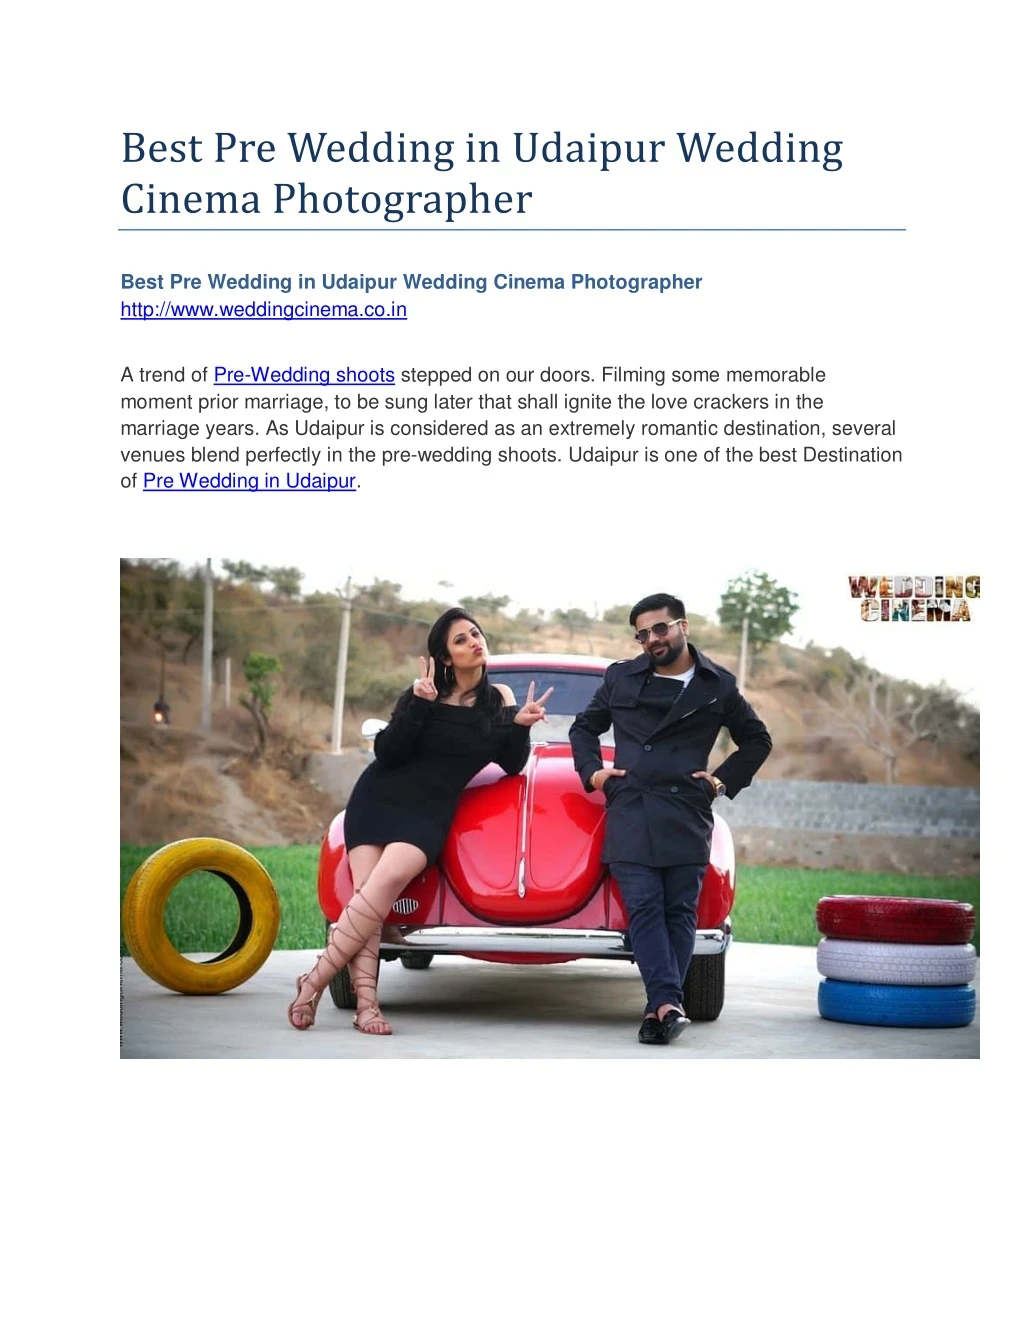 best pre wedding in udaipur wedding cinema